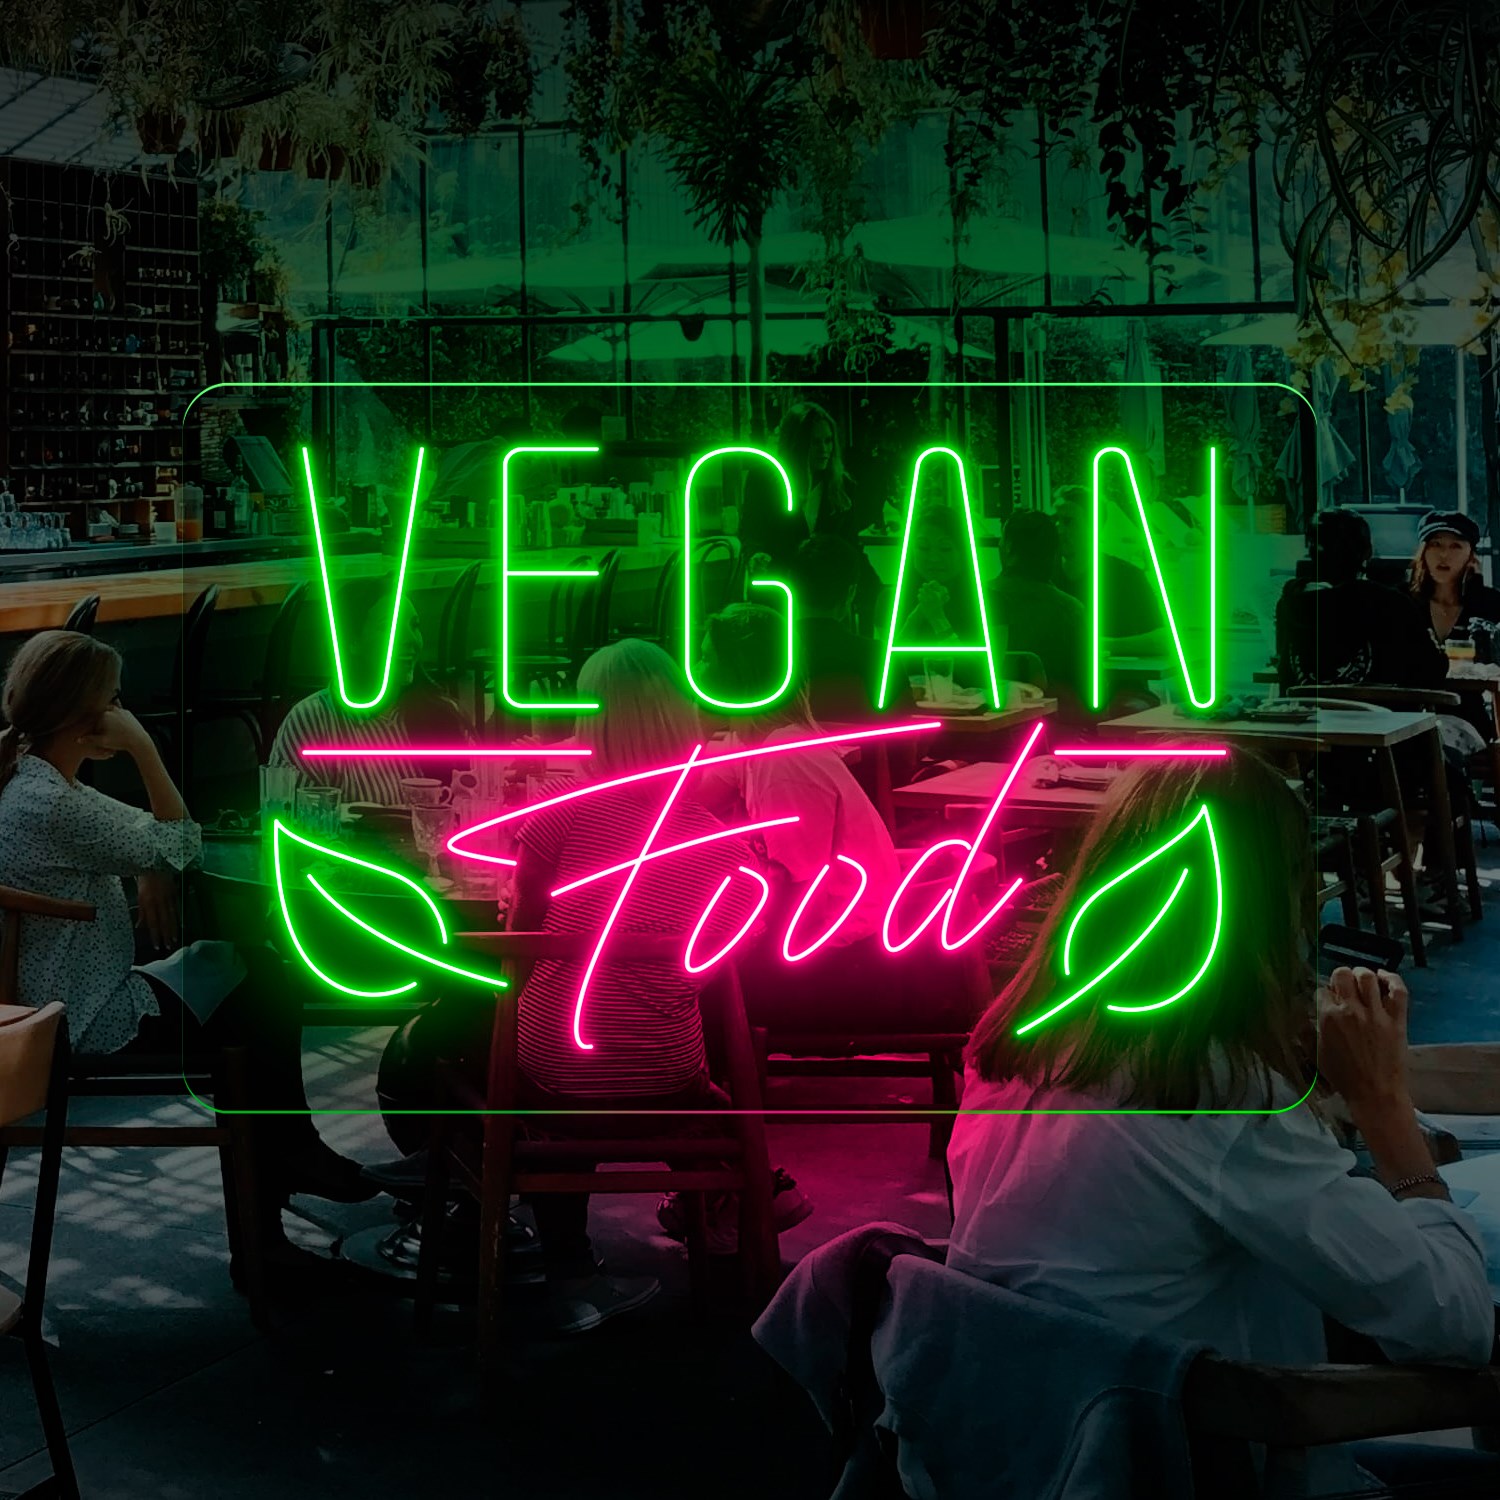 Image de Néon "Vegan Food"